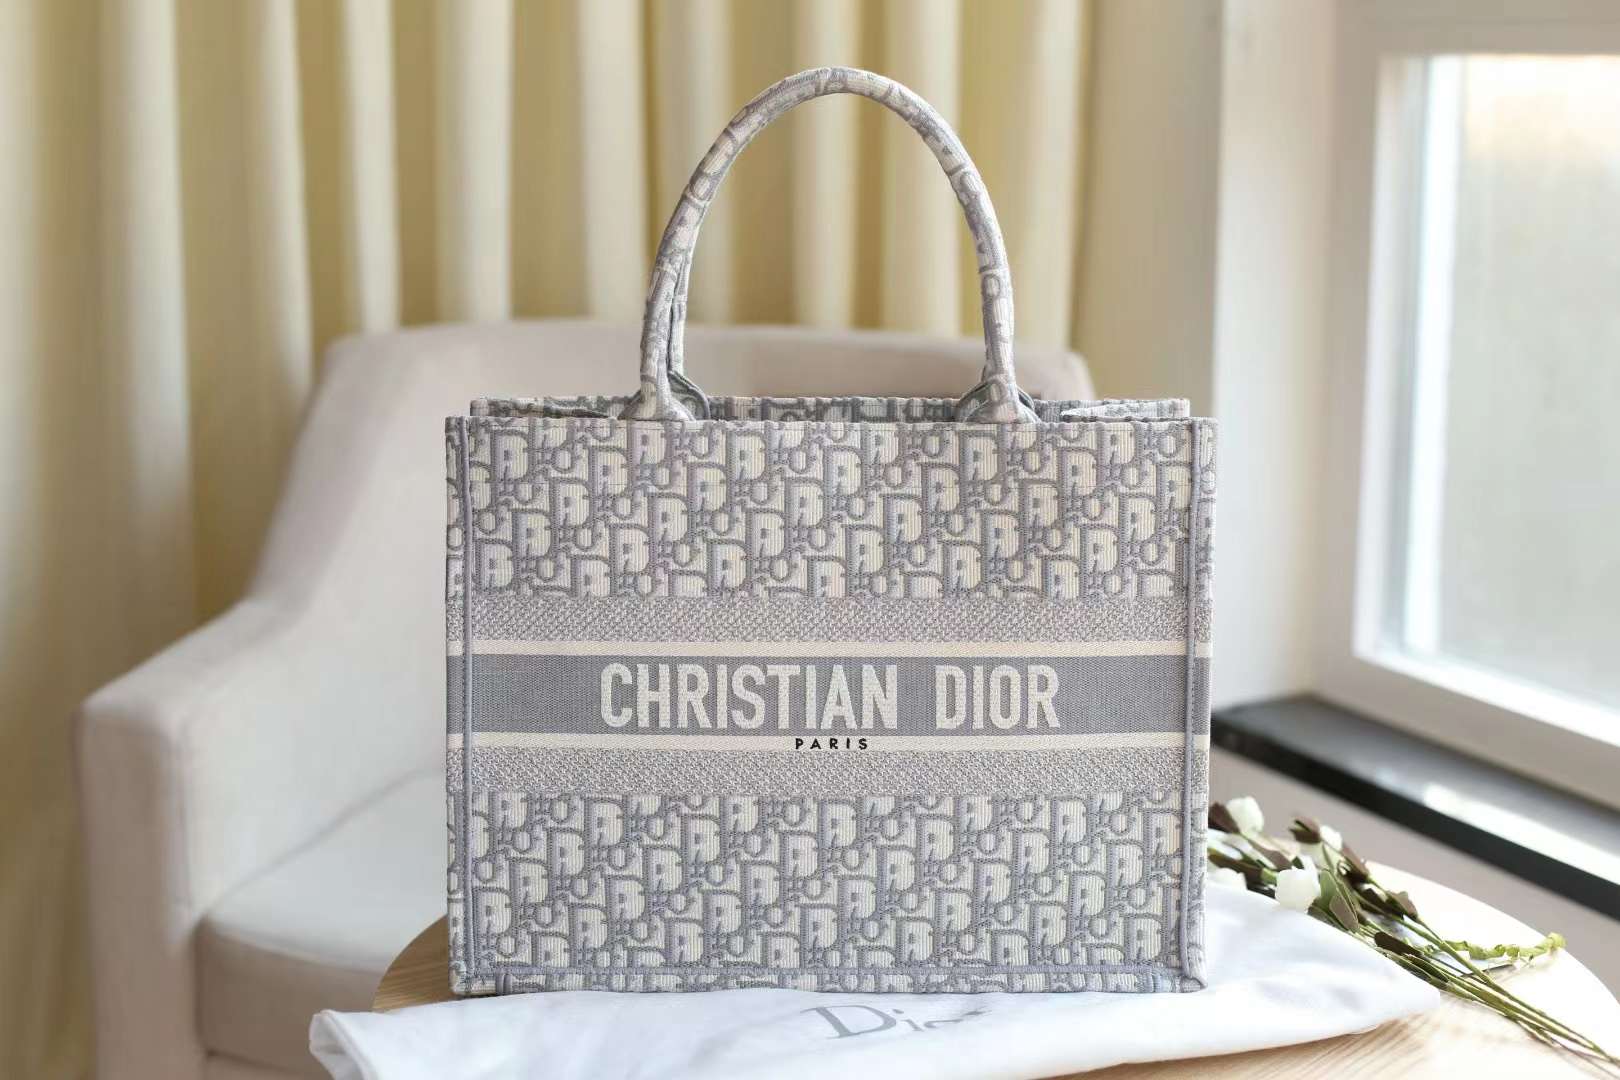 dior也是法国品牌,创立于1946年,创始人christian dior擅长做衣服